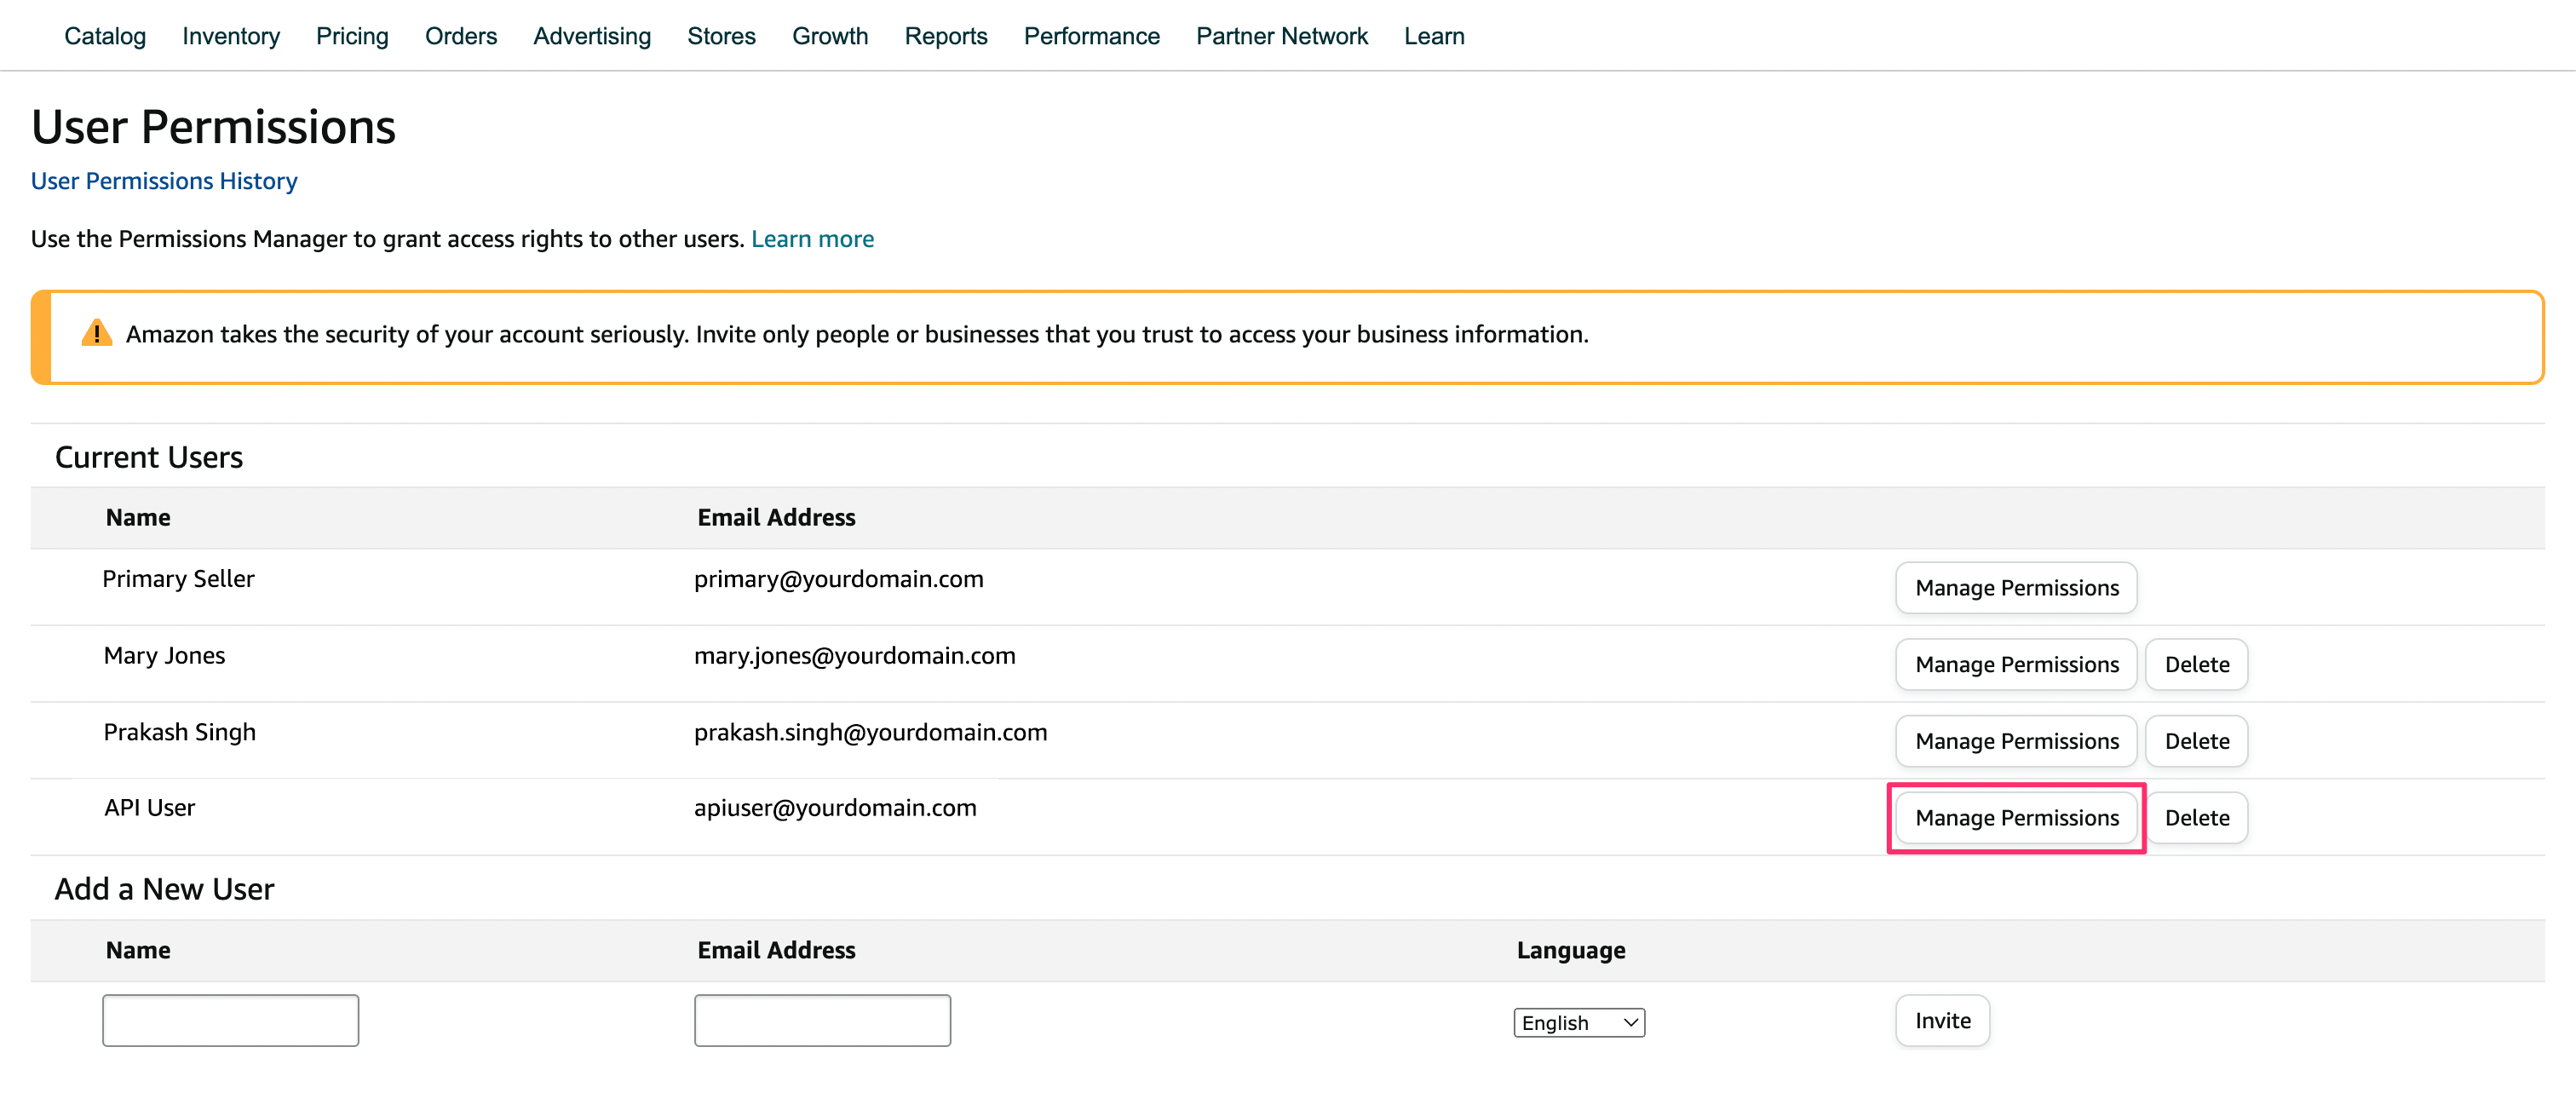 Next to the API User, click Manage Permissions.